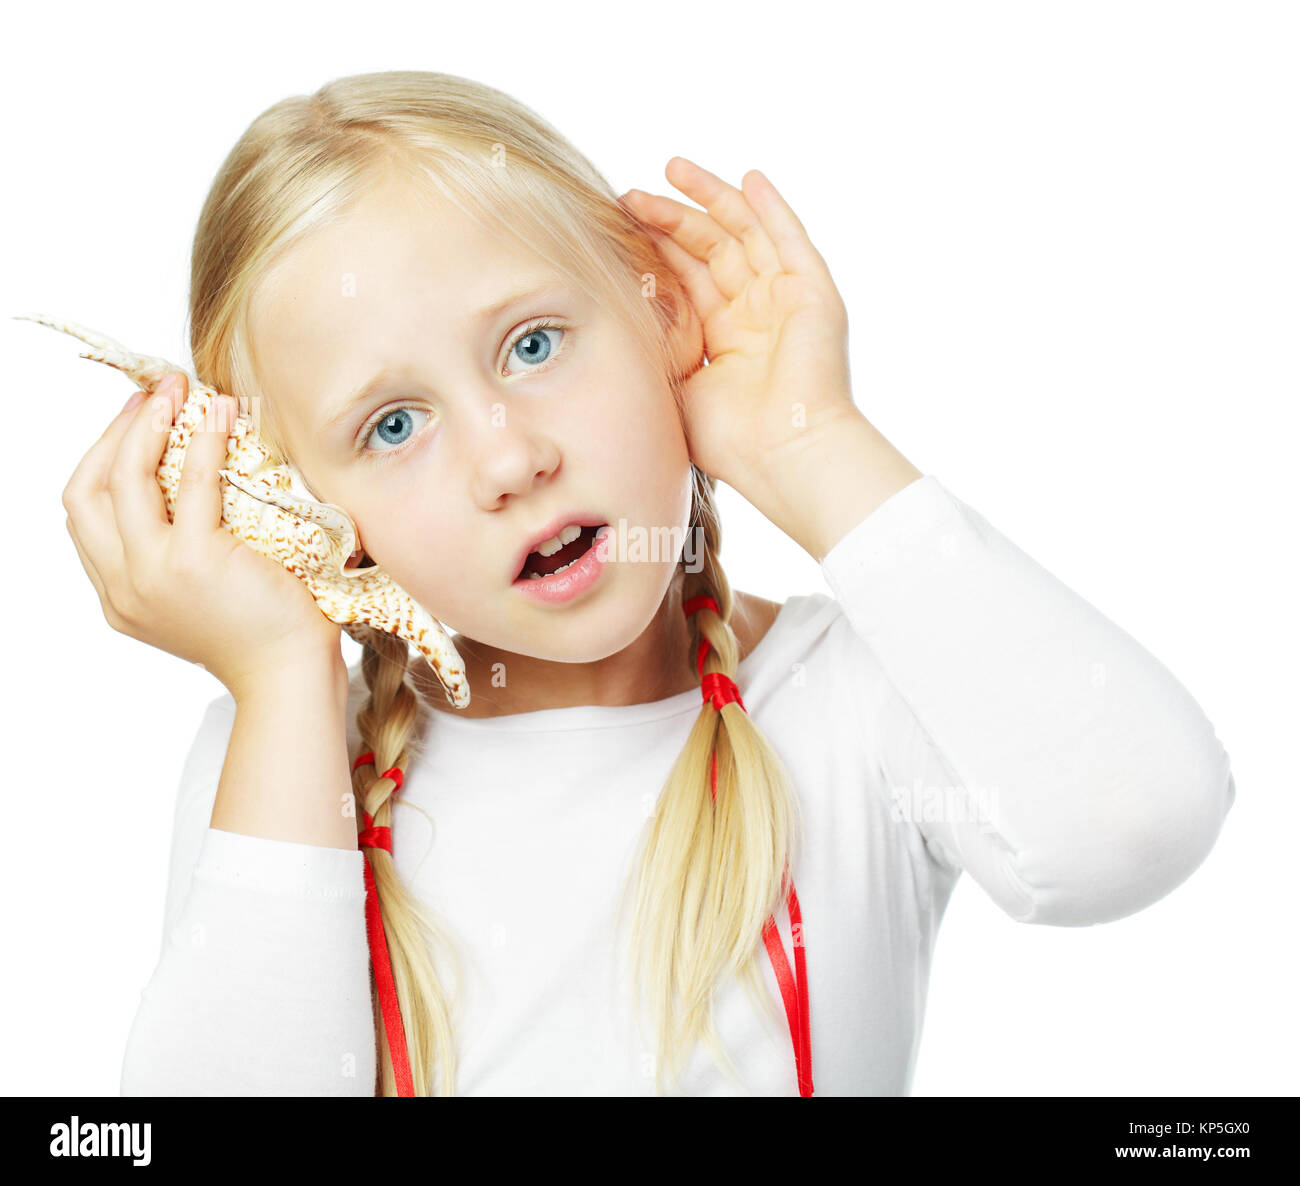 Little girl listening, communication concept Stock Photo